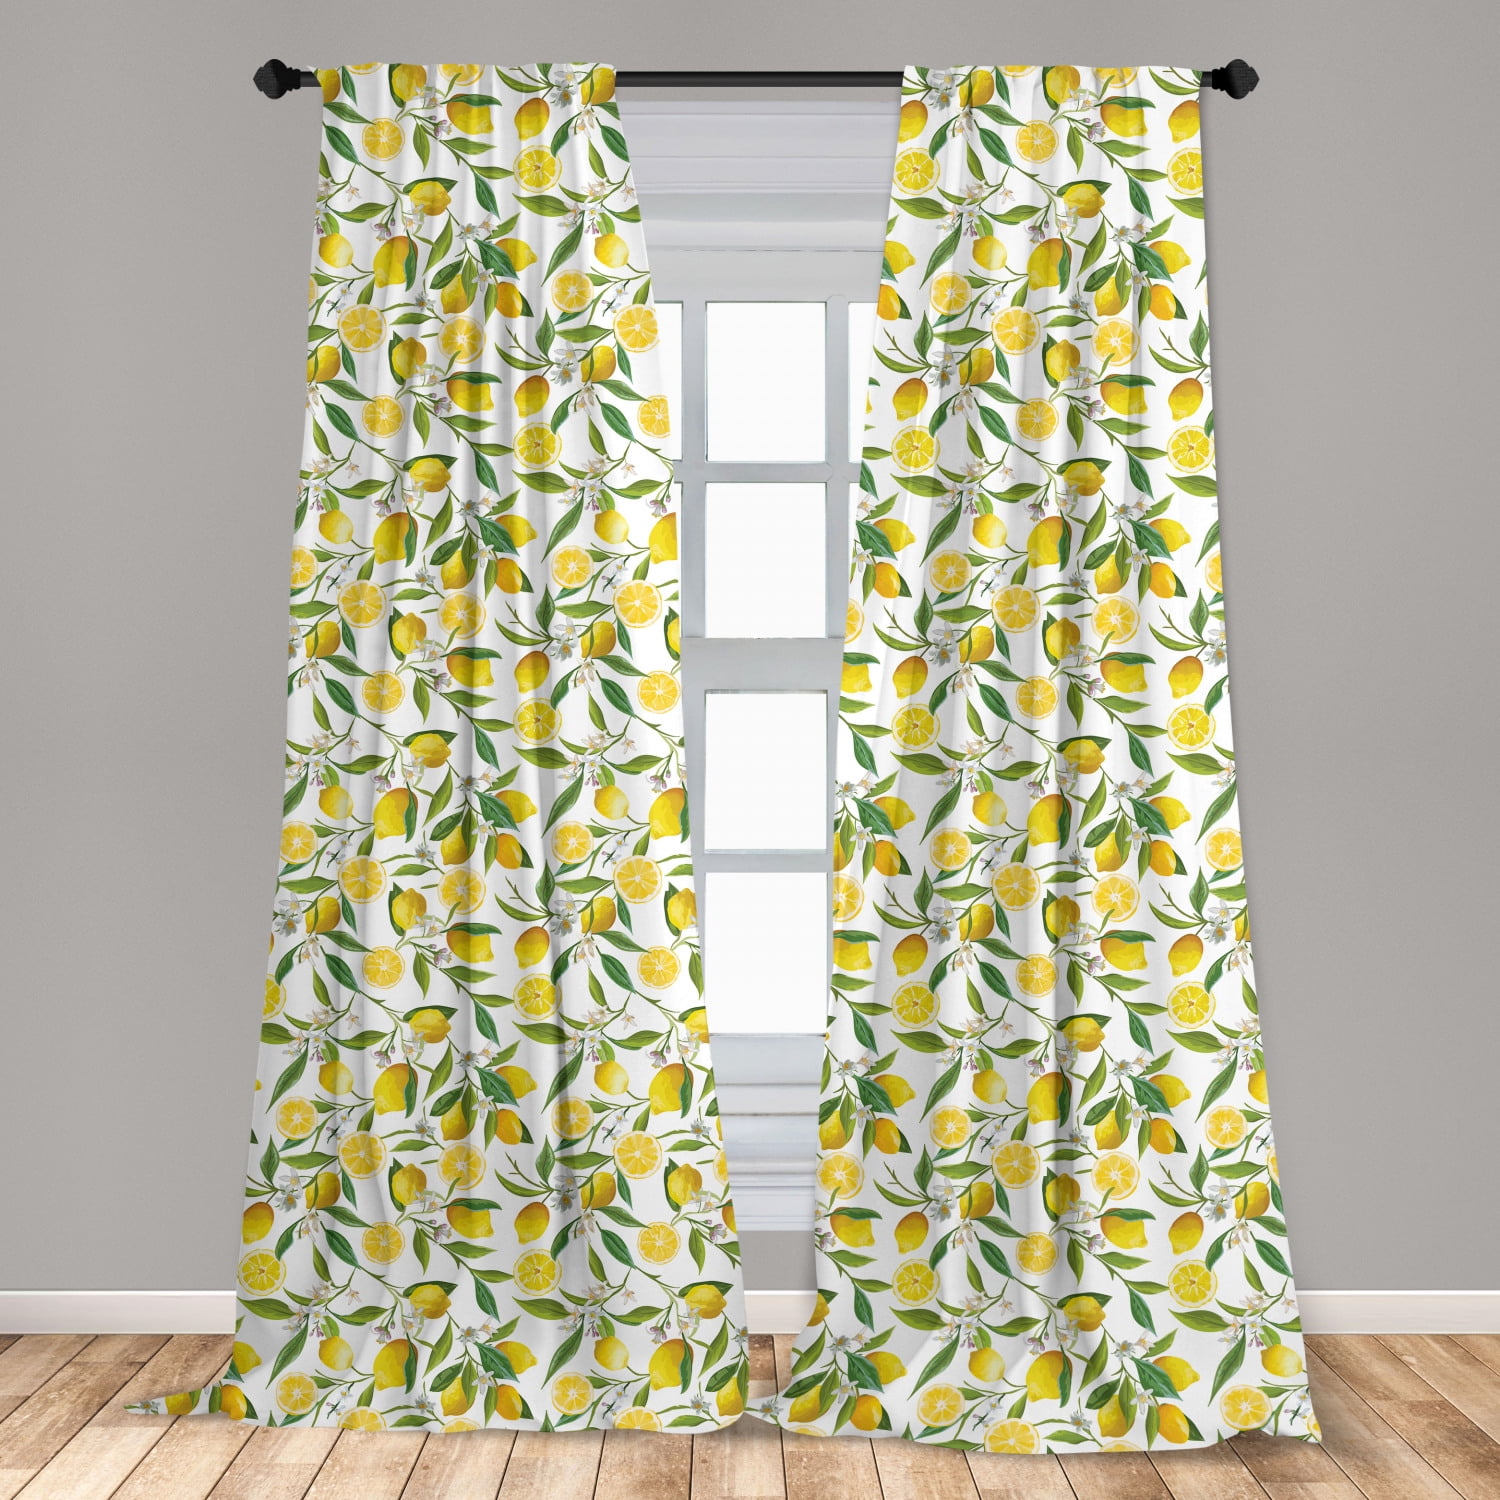 Summer Lemon Pattern Shower Curtain Fabric Decor Set with Hooks 4 Sizes 